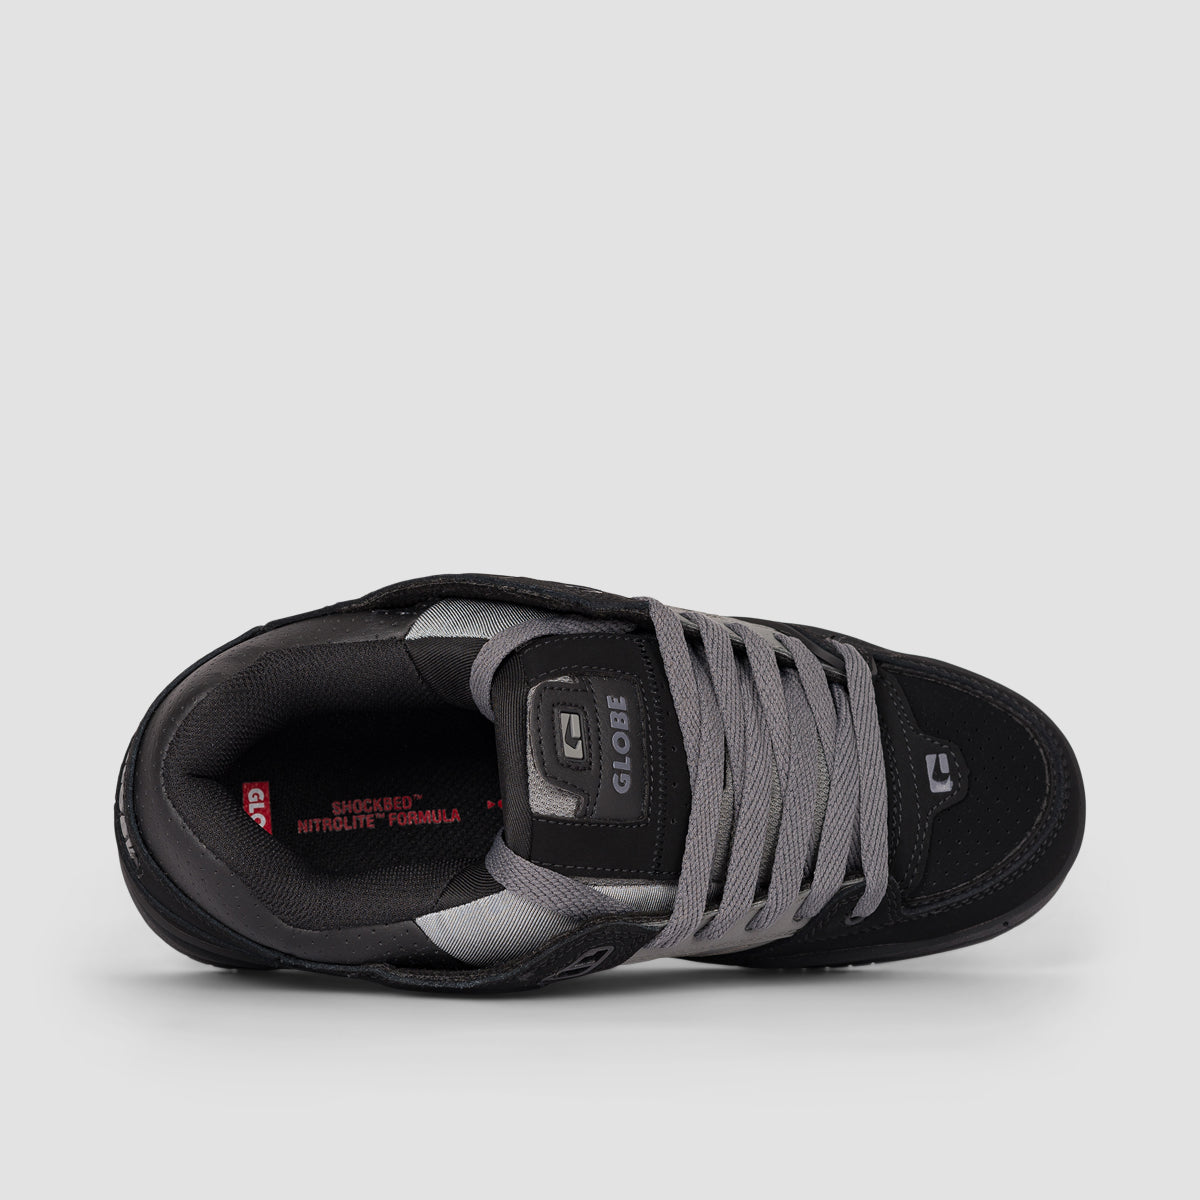 Globe Fusion Shoes - Black/Charcoal Split